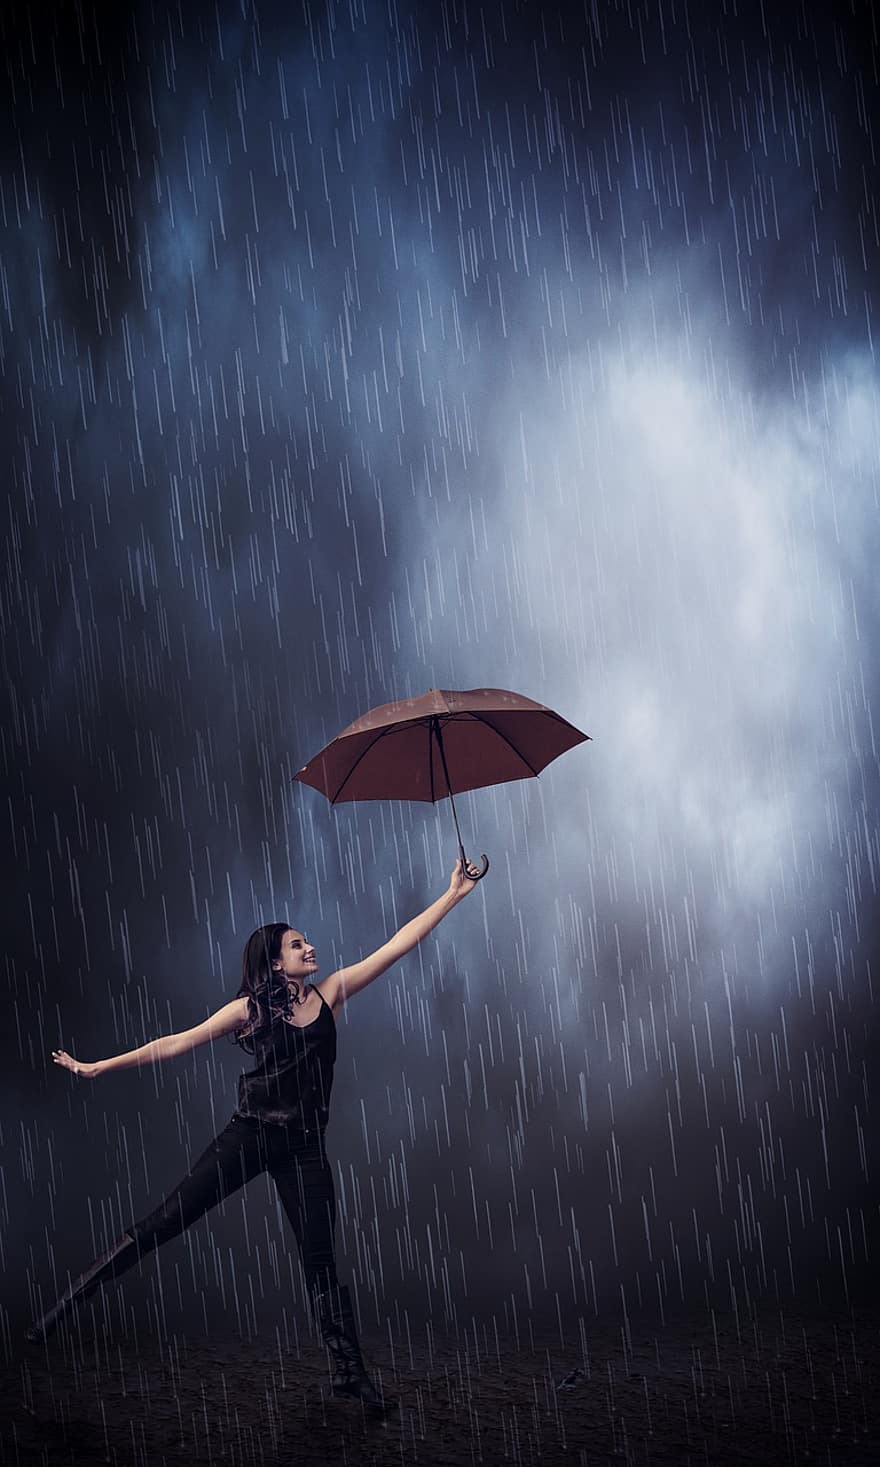 Regen, Regenschirm, Mädchen, Wetter, nass, Wasser, Spritzen, Regentropfen